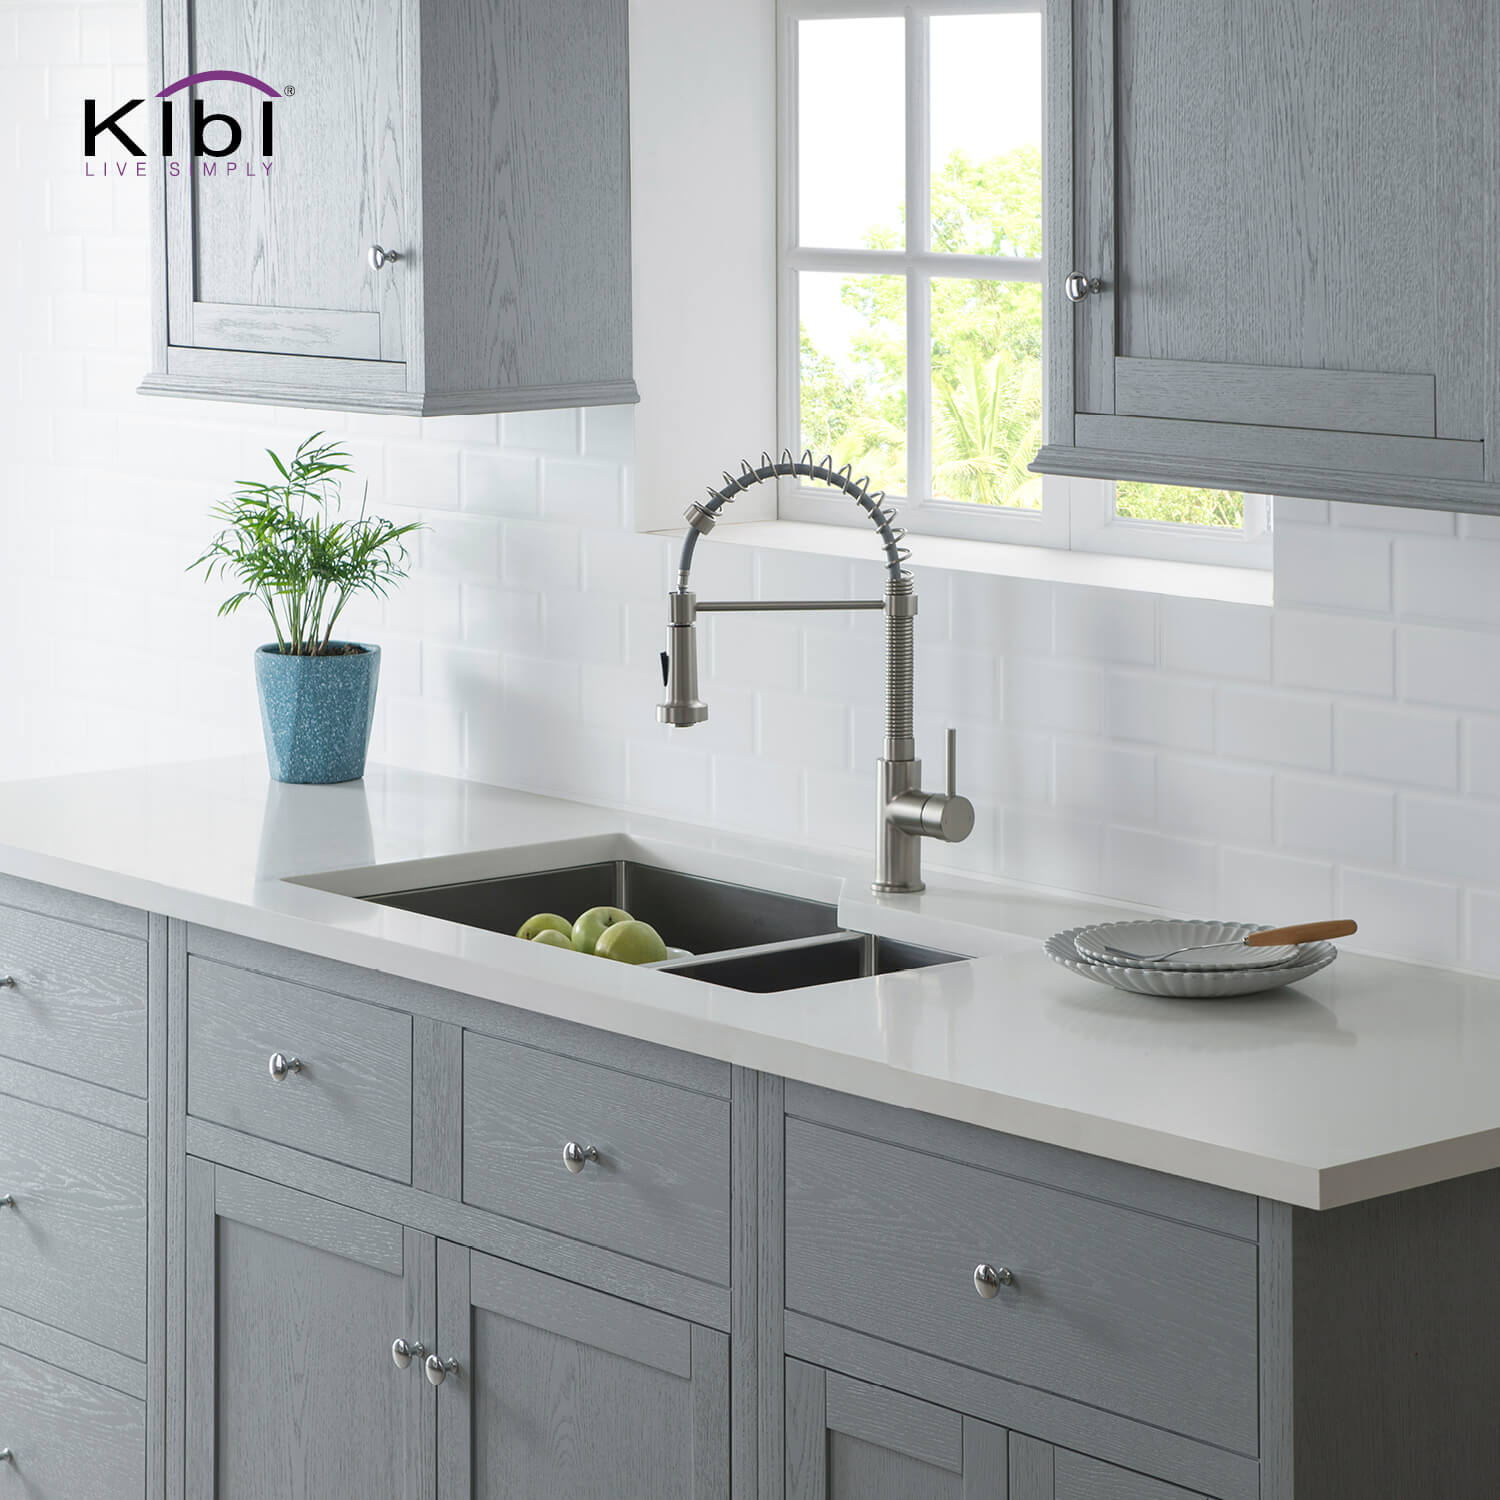 Kibi 32" x 20" x 10" Handcrafted Undermount Double Bowl Stainless Steel Kitchen Sink